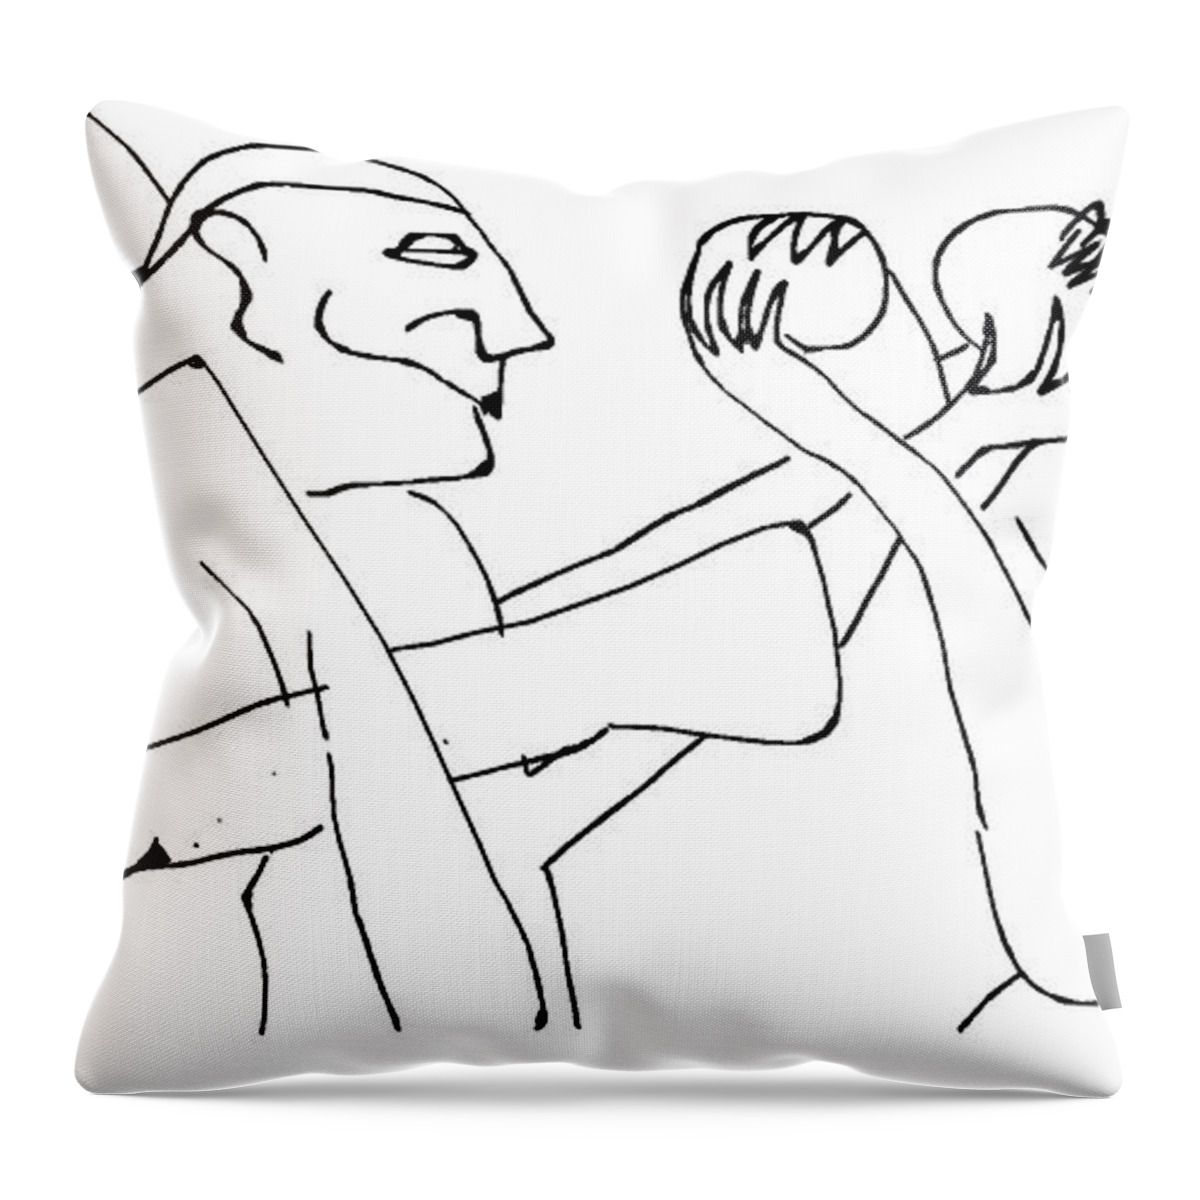  Throw Pillow featuring the digital art Juggling Osiris by Doug Duffey